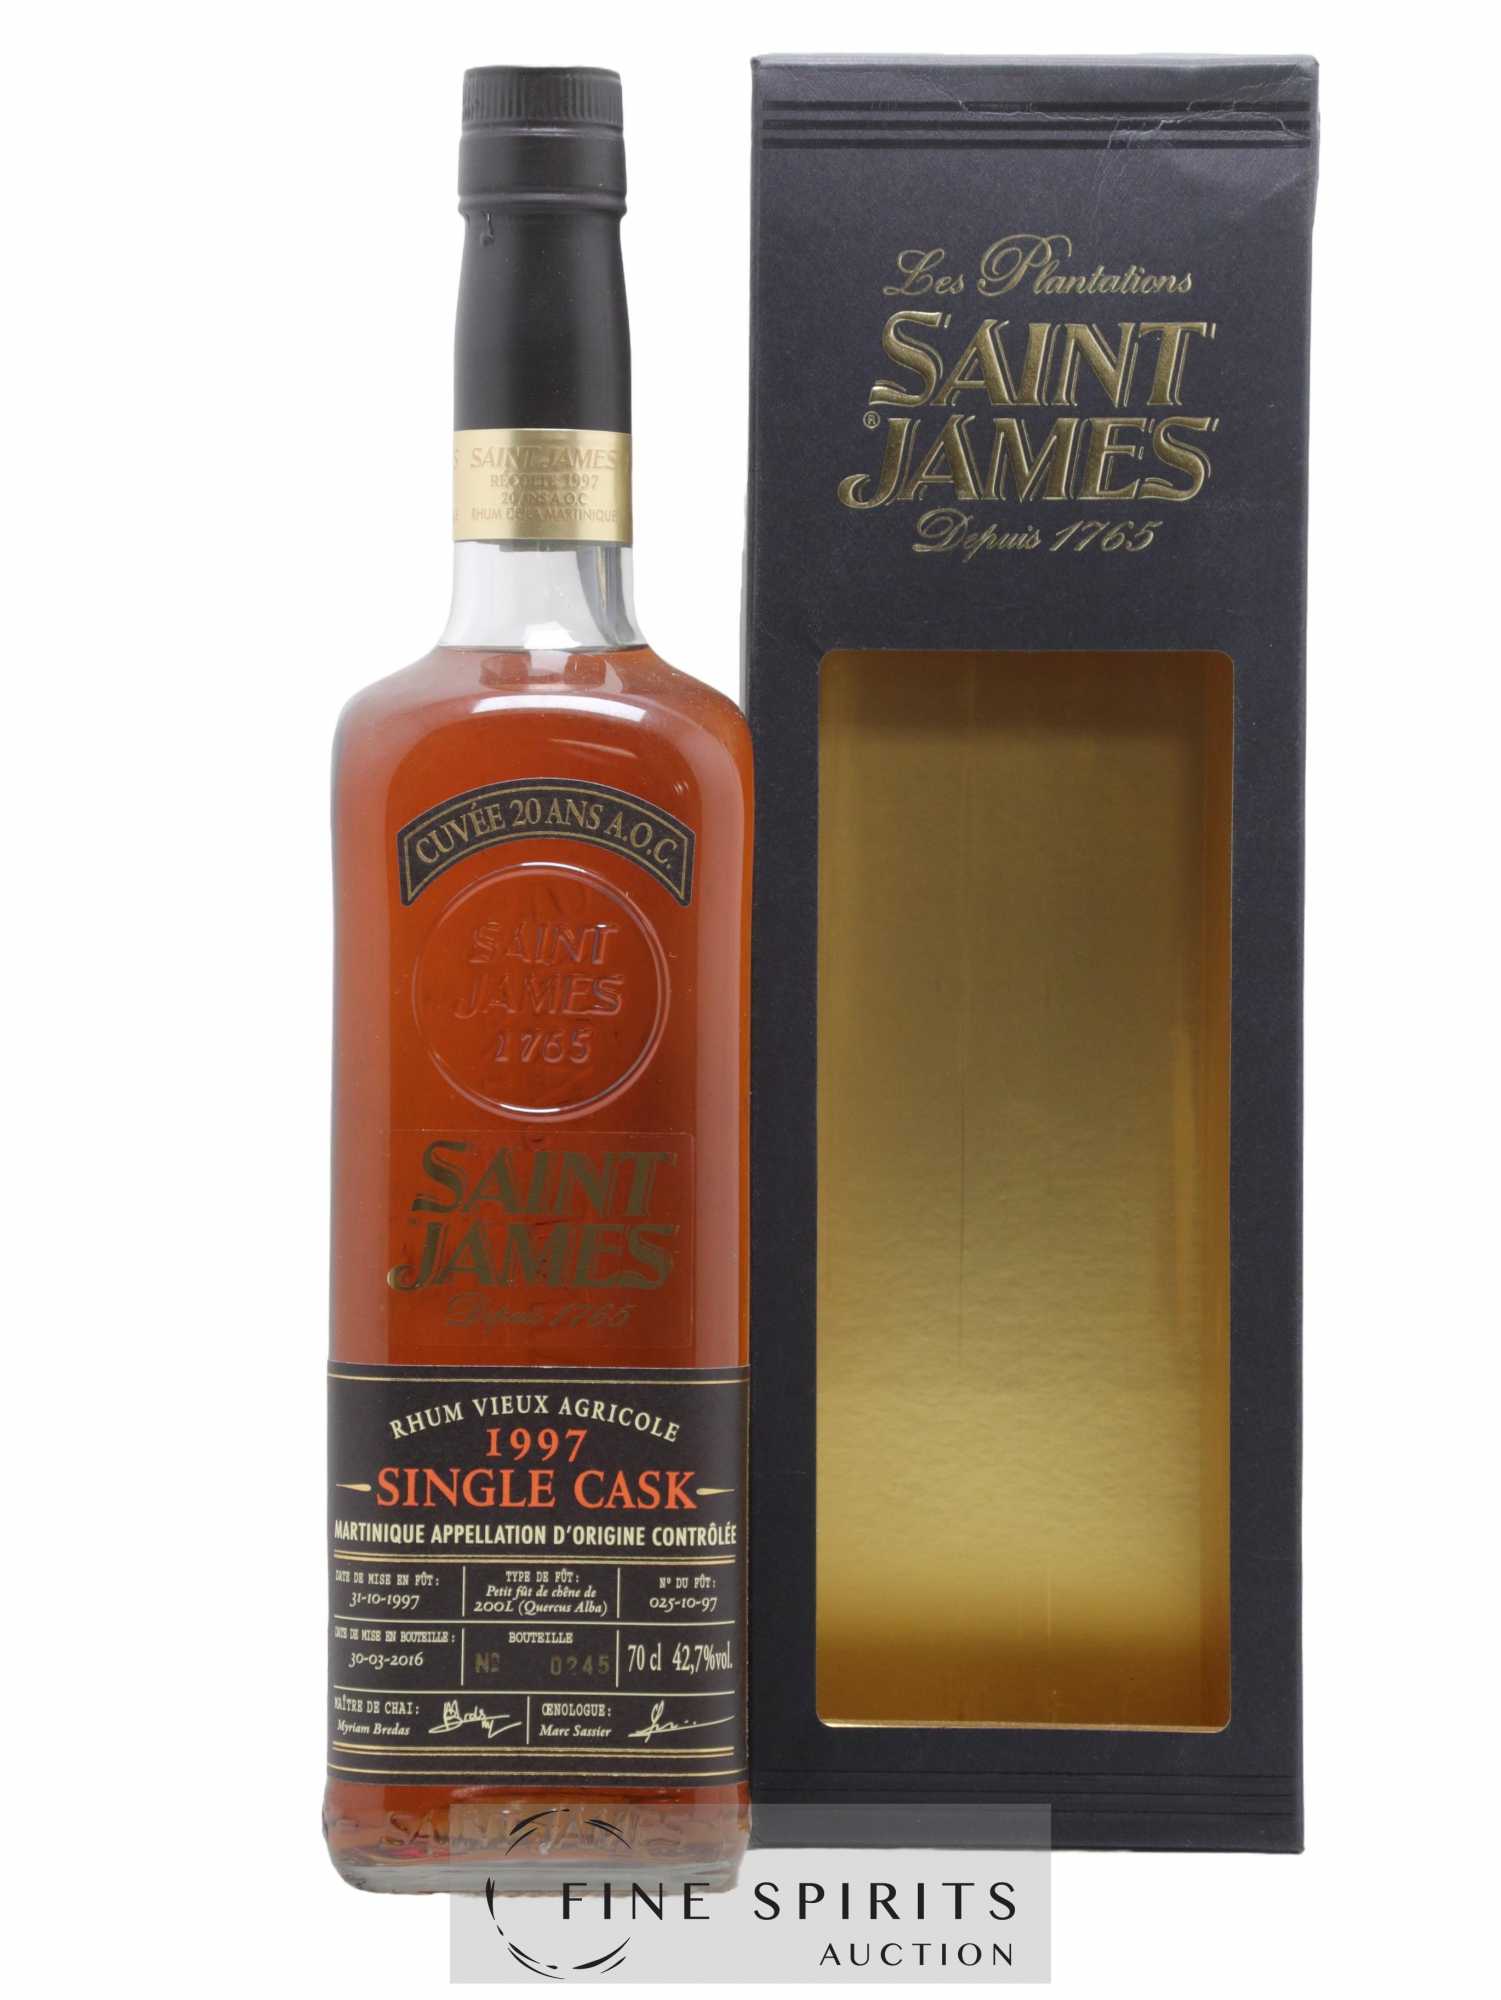 Saint James 20 years 1997 Of. Cuvée 20 Ans A.O.C. n°025-10-97 - bottled 2016